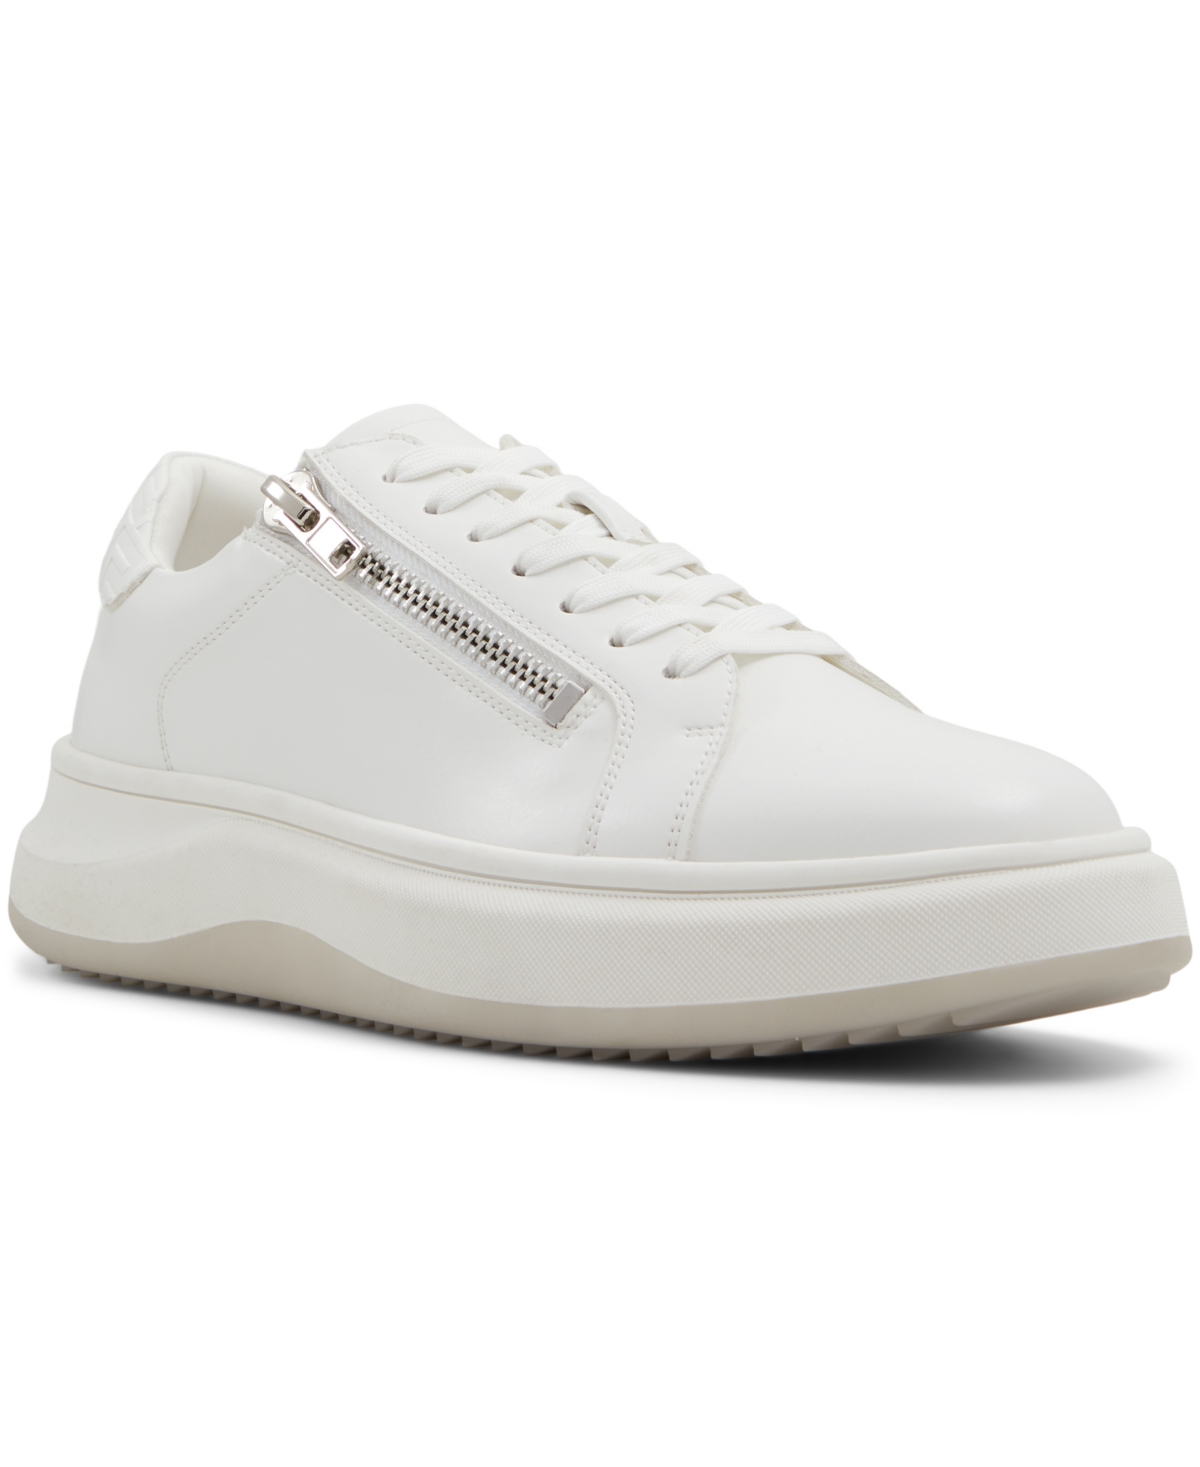 Men's Superspec Fashion Athletic Sneaker - White